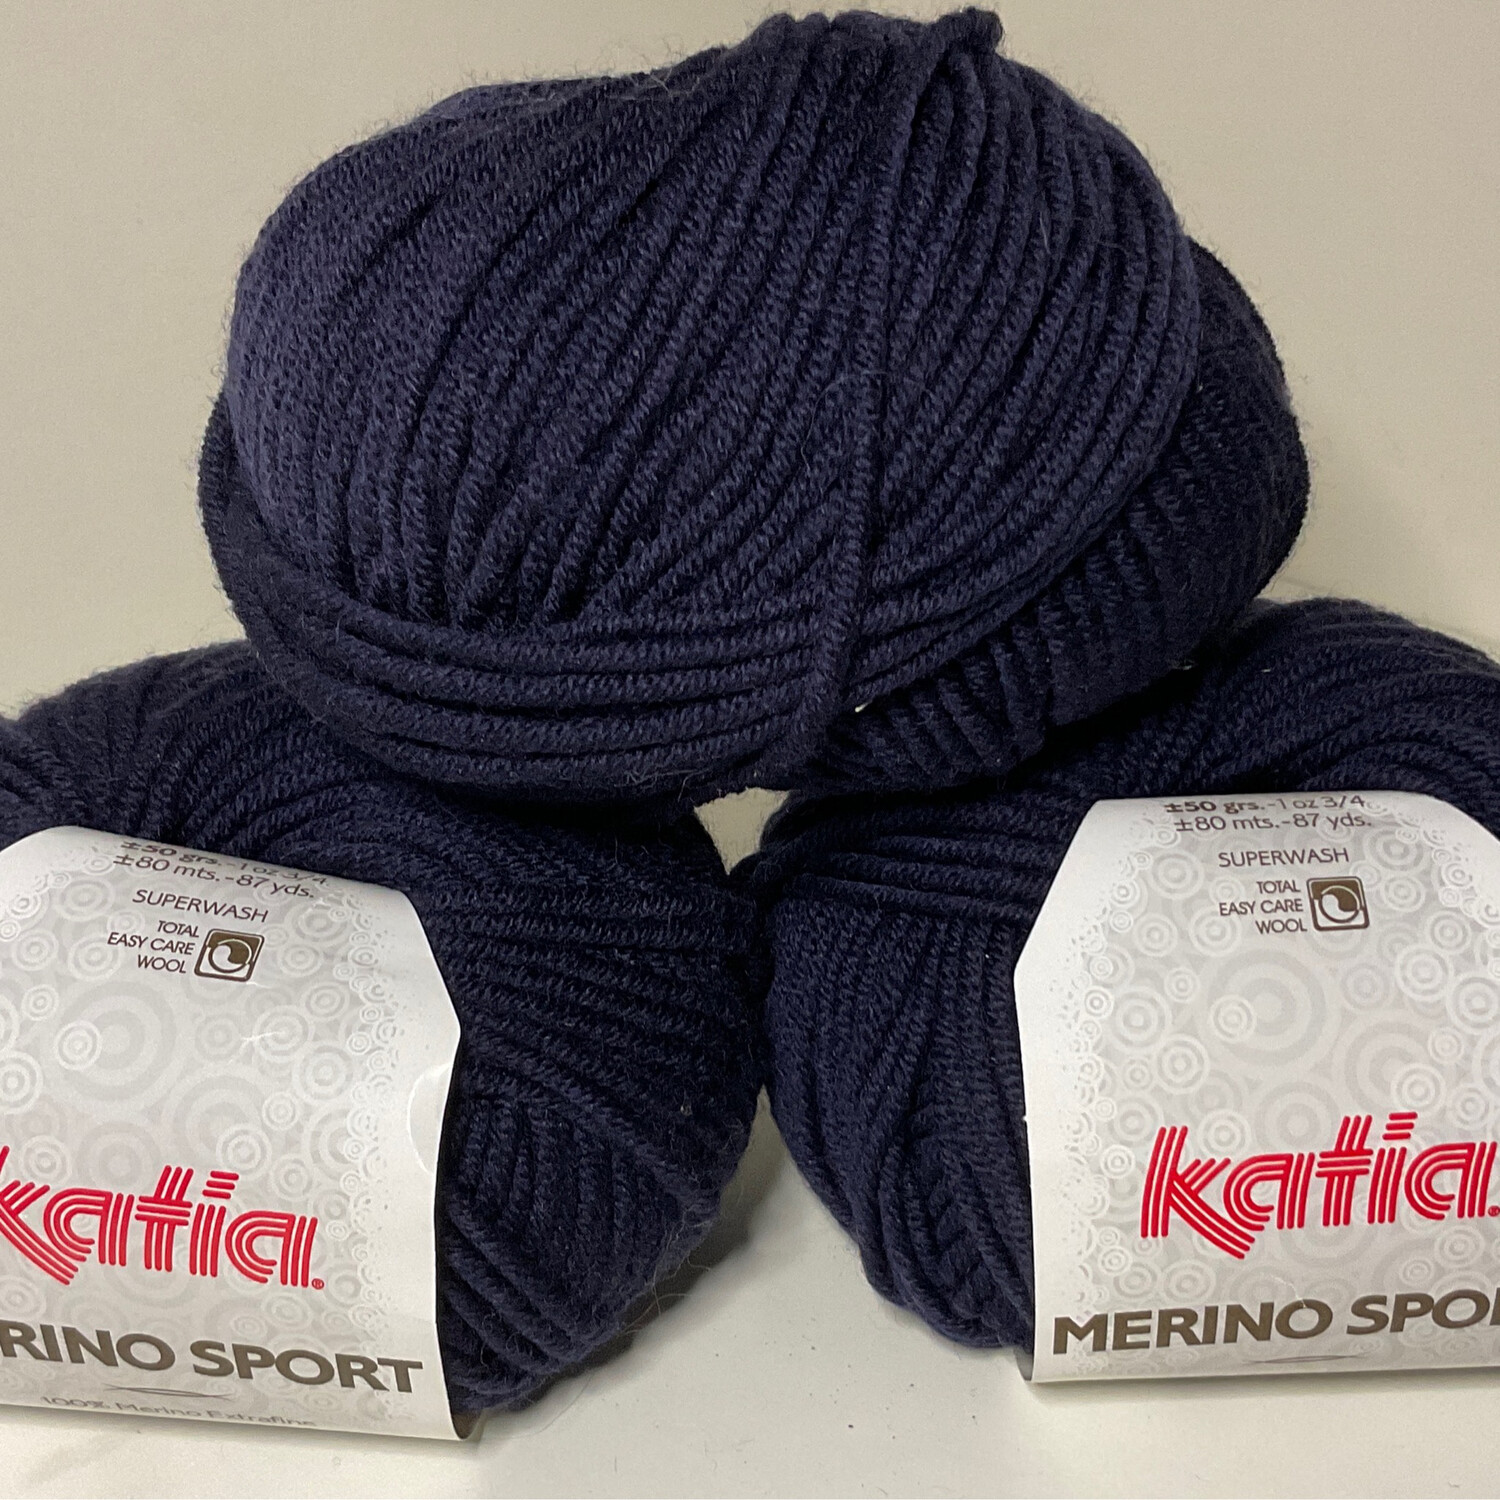 Katia Merino Sport 5 zeer donker blauw *